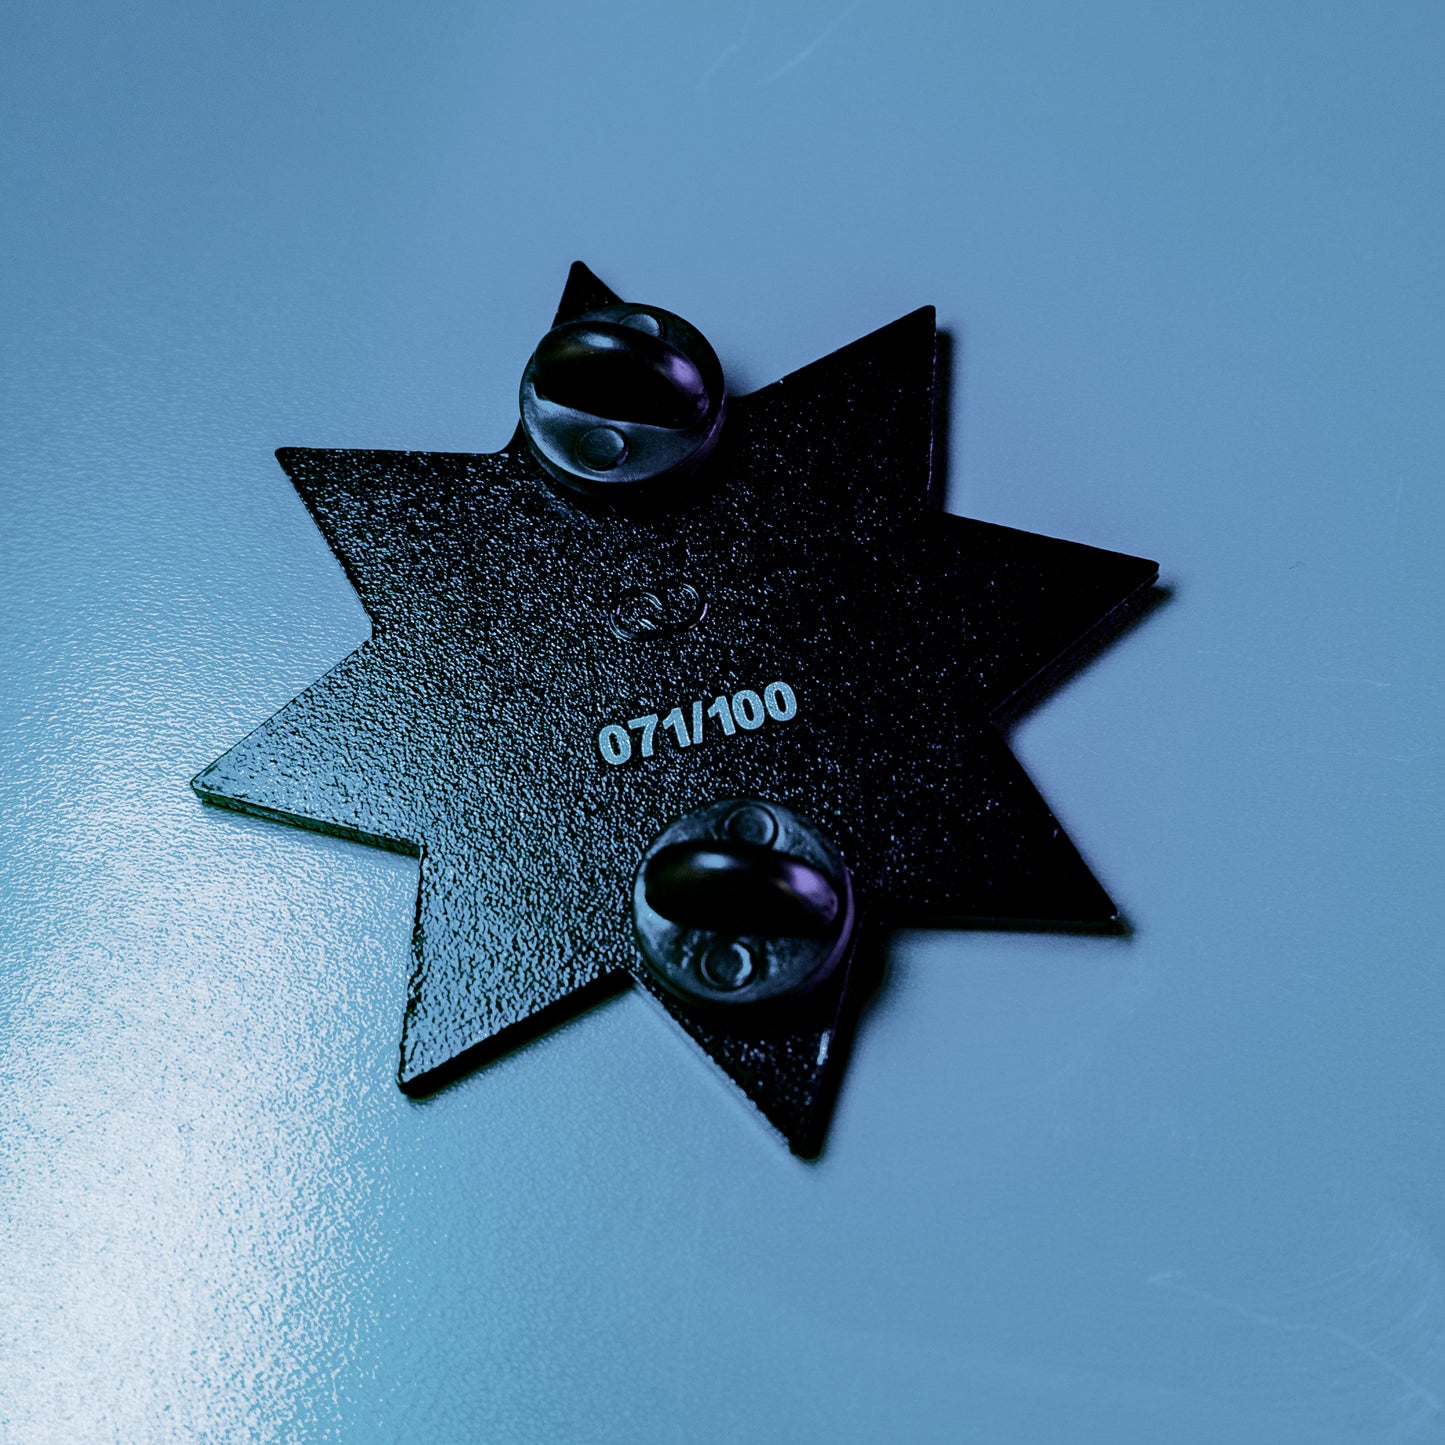 Star [Geometric Series One] | Limited Edition Enamel Pin